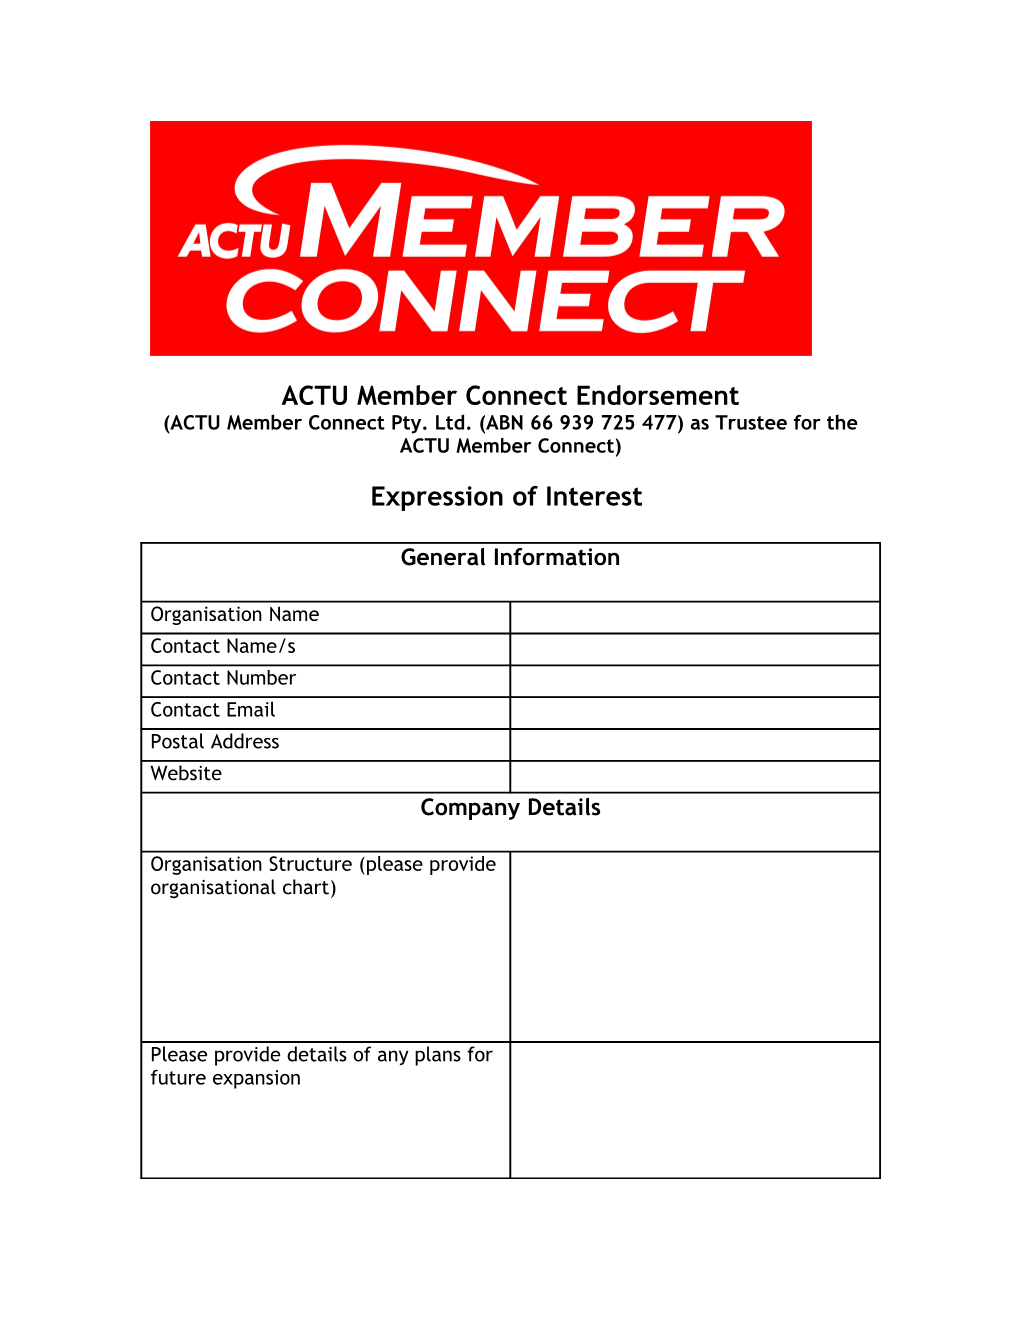 ACTU Member Connect Endorsement